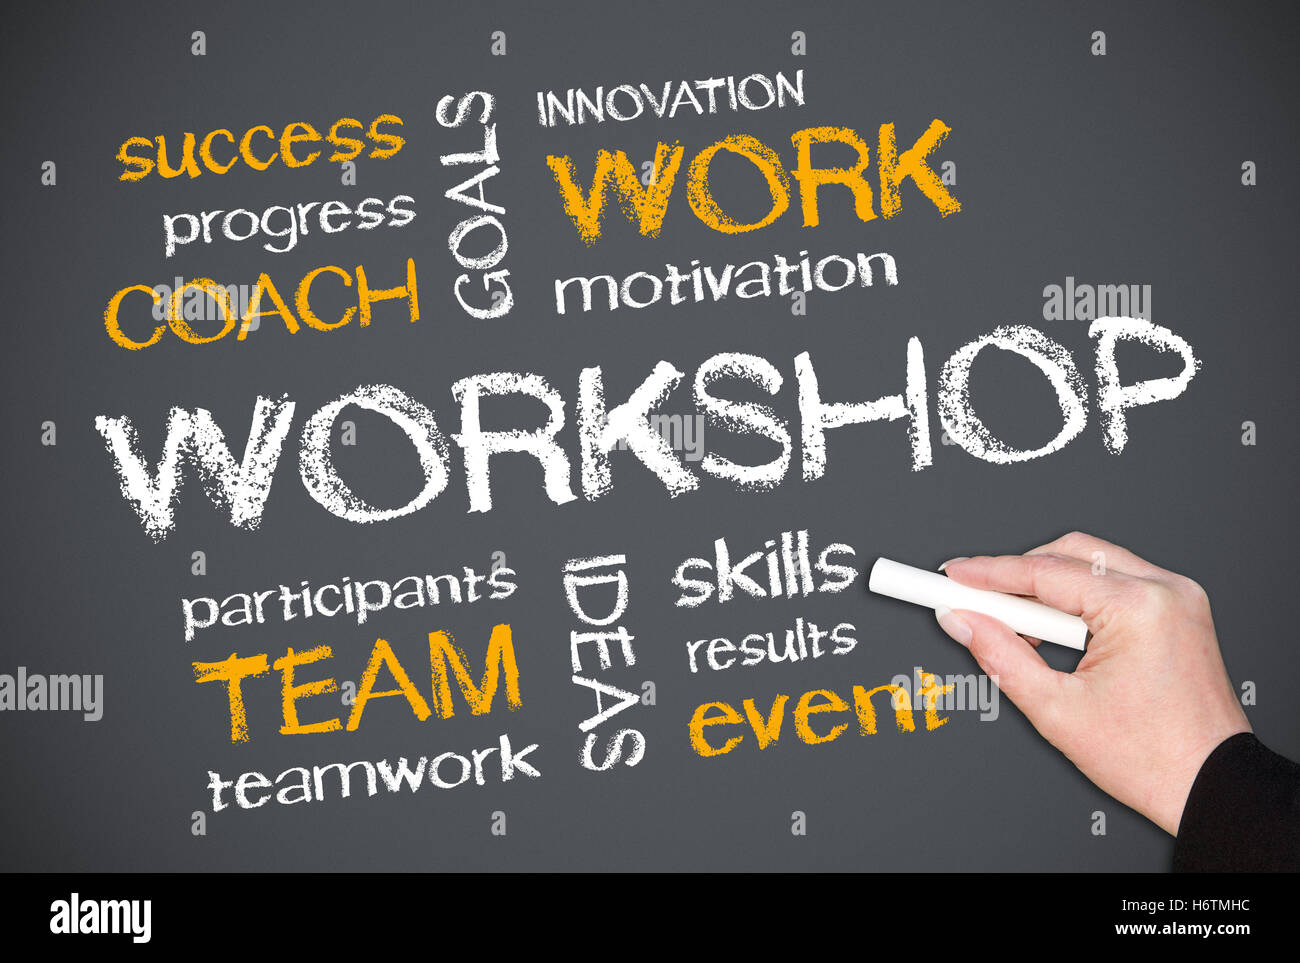 workshop - business concept Stock Photo